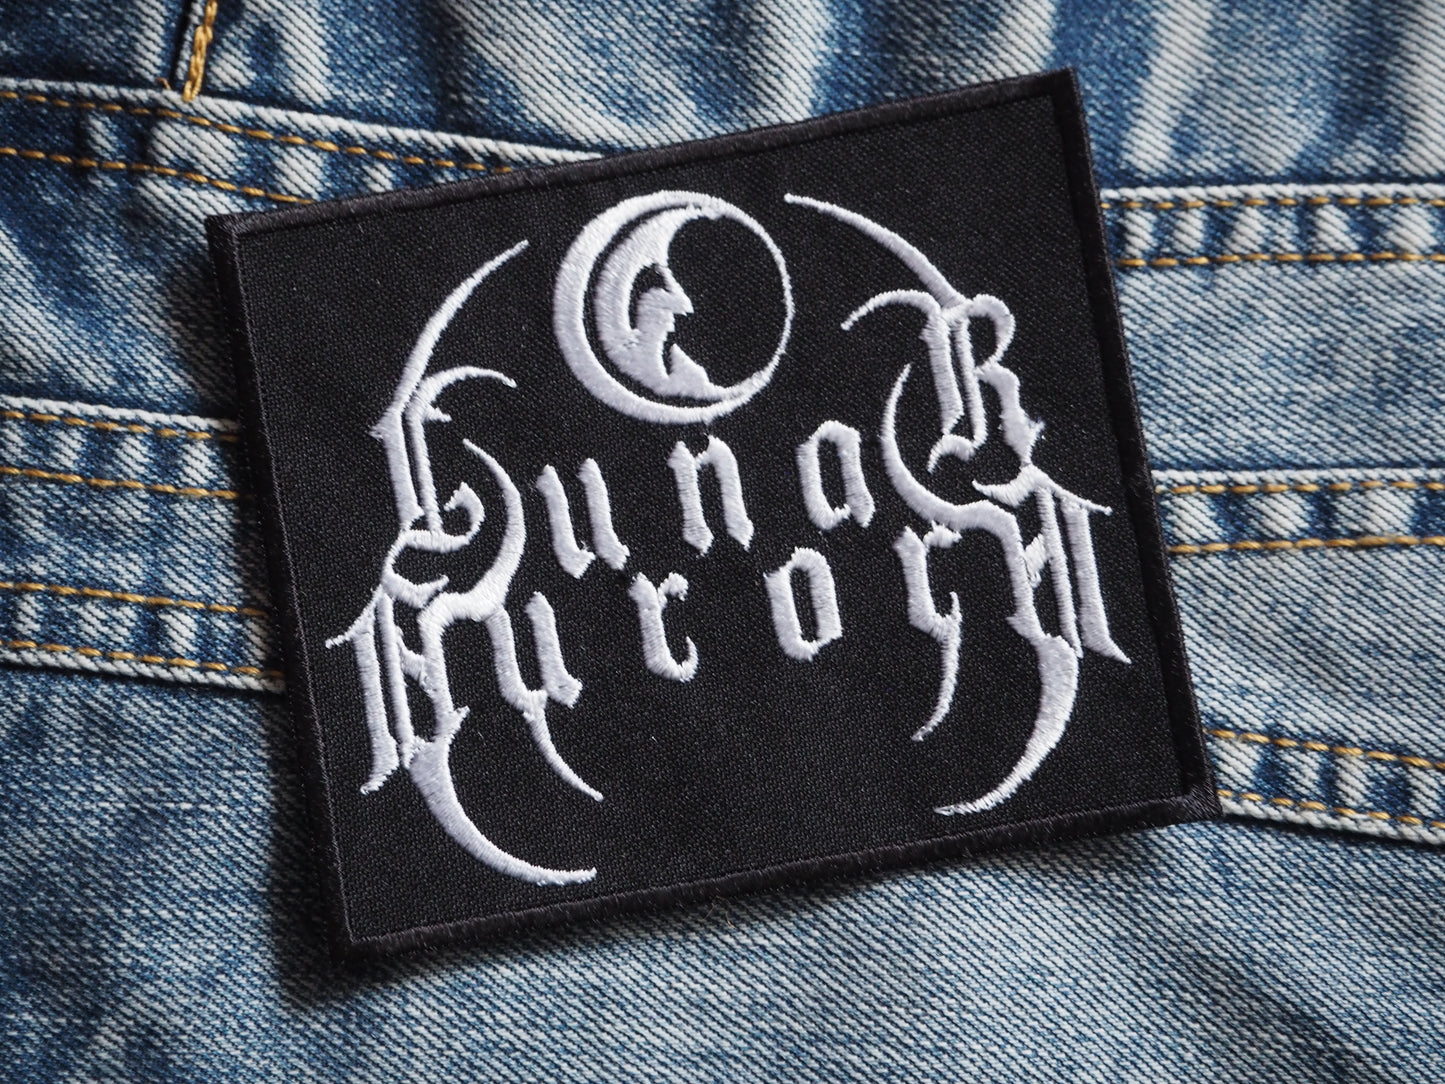 Lunar Aurora Black Metal Embroidered Patch